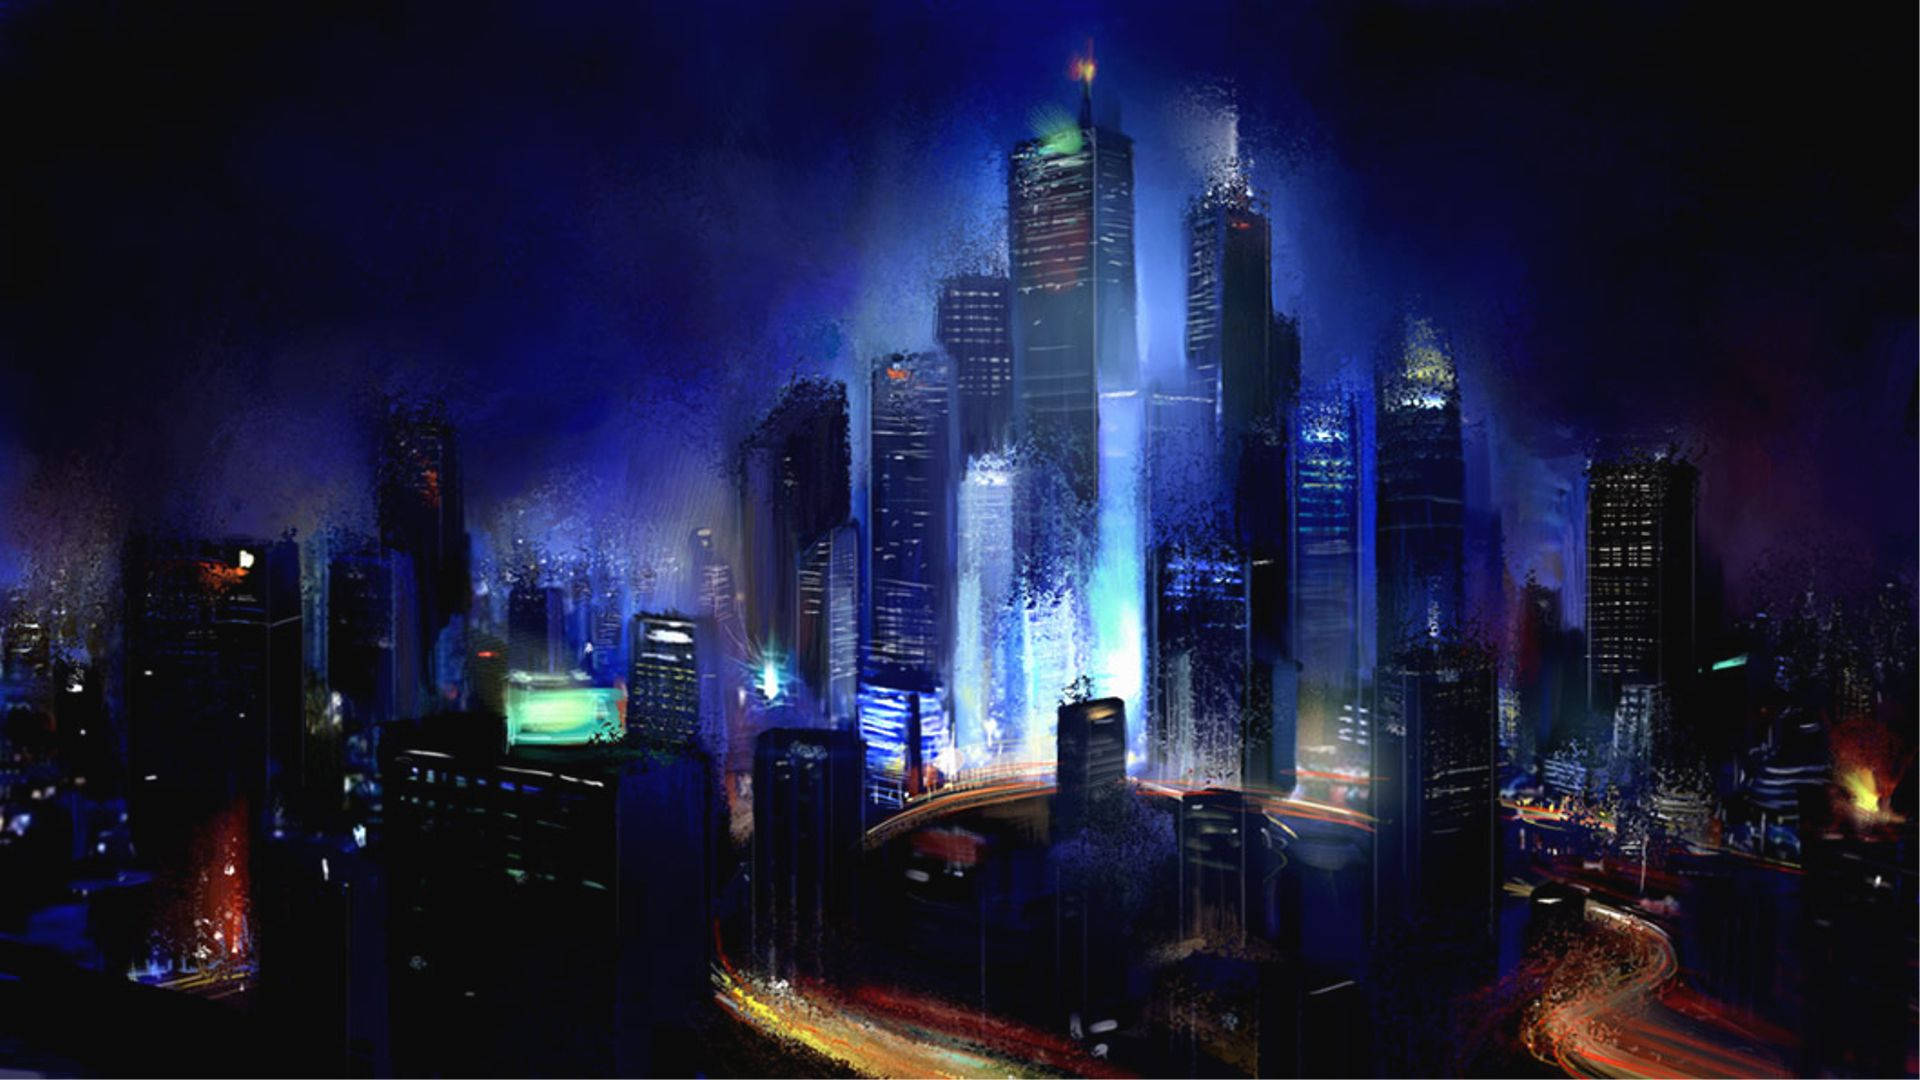 Beautiful Cityscape Of Skyscrapers Illuminated By Illuminated By Warm Lights